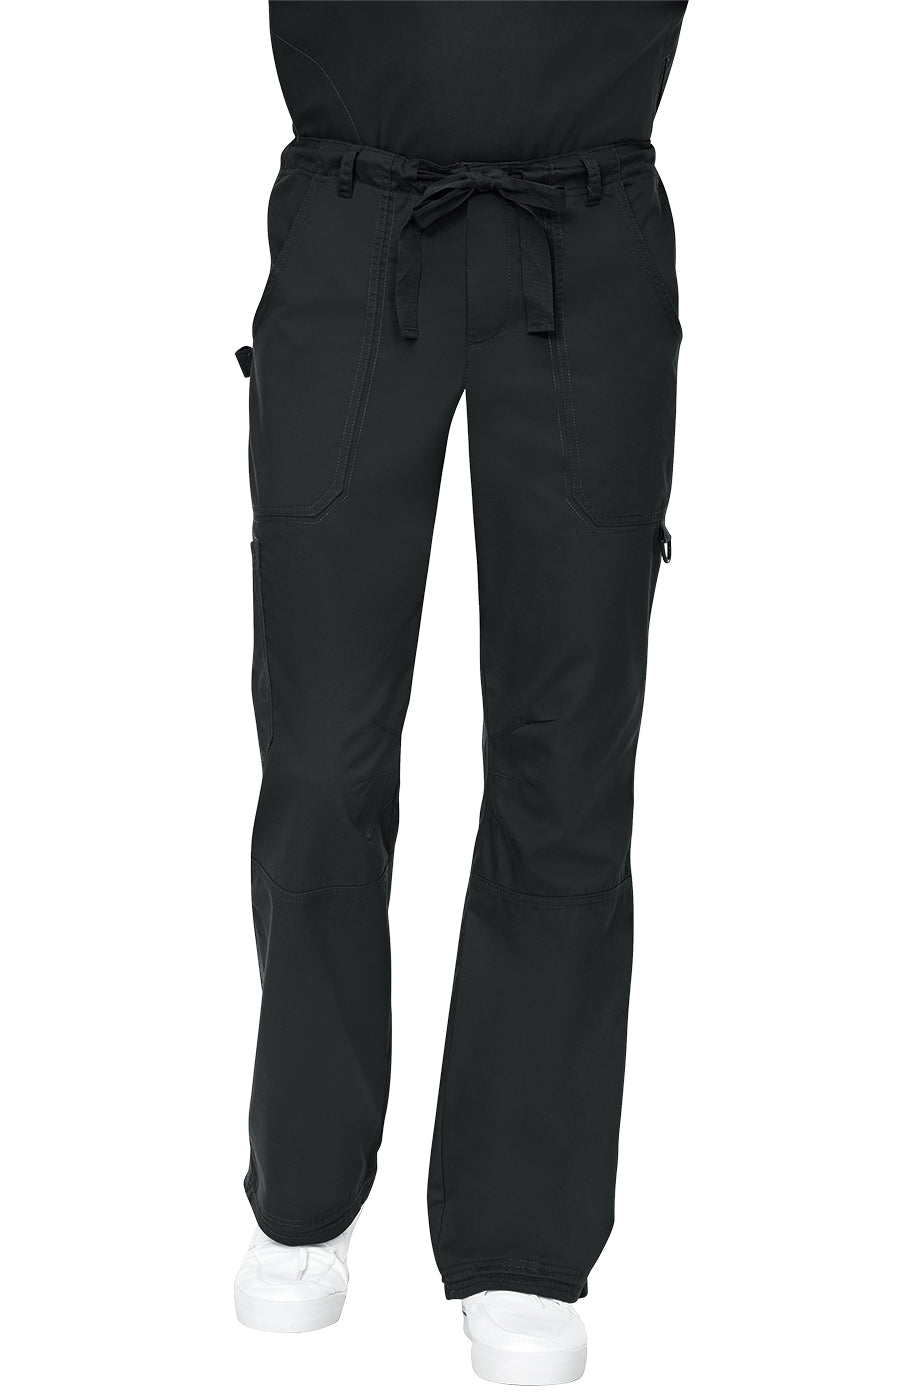 koi Classic James Pant - Men's 6-Pocket Cargo Scrub Pants Tall Men's Tall Scrub Pant Koi Black XS 